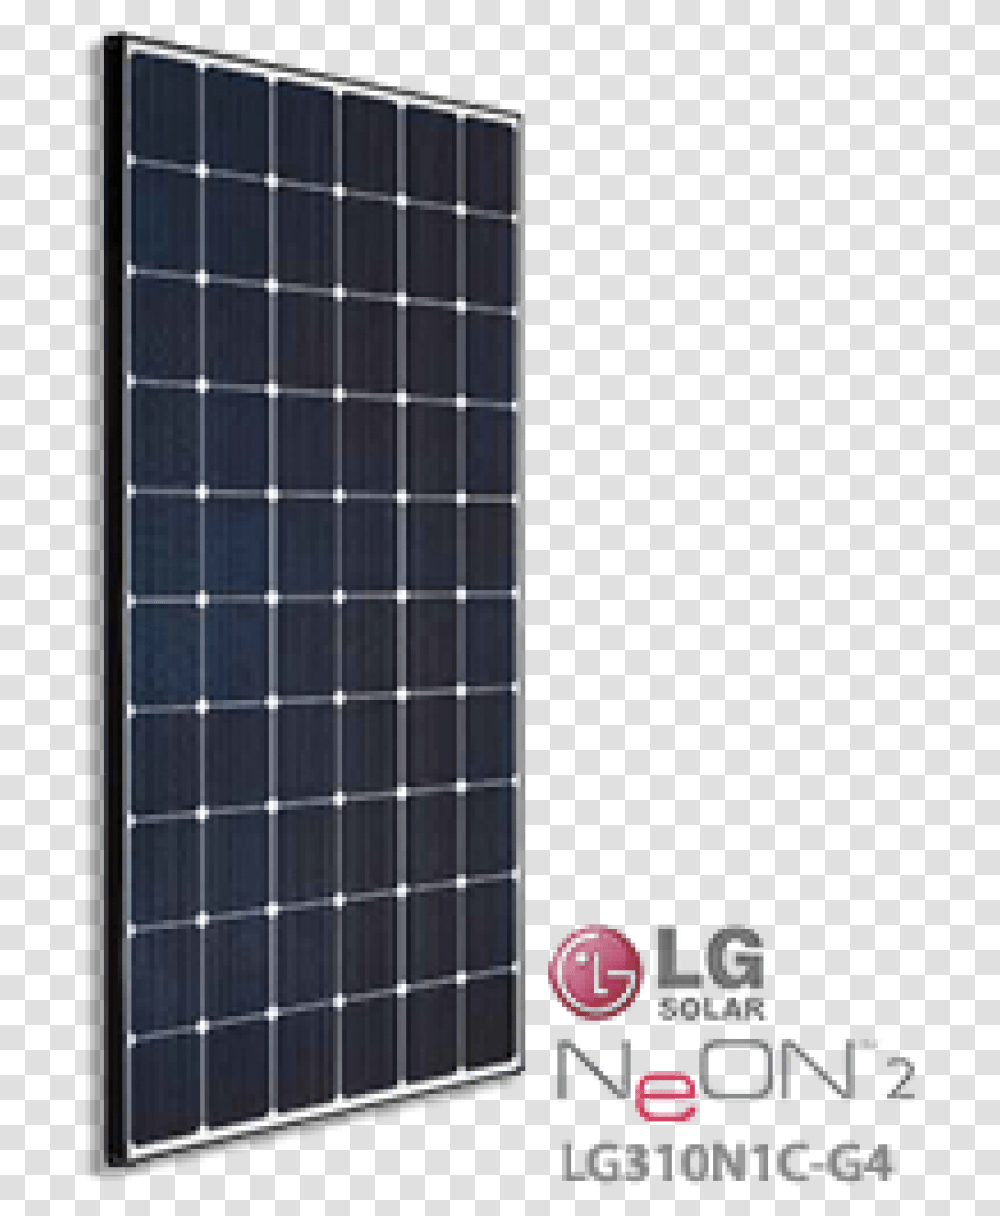 Lg 310w Mono Lg310n1c G Lg315n1c G4 Solar Panel, Electrical Device, Solar Panels Transparent Png